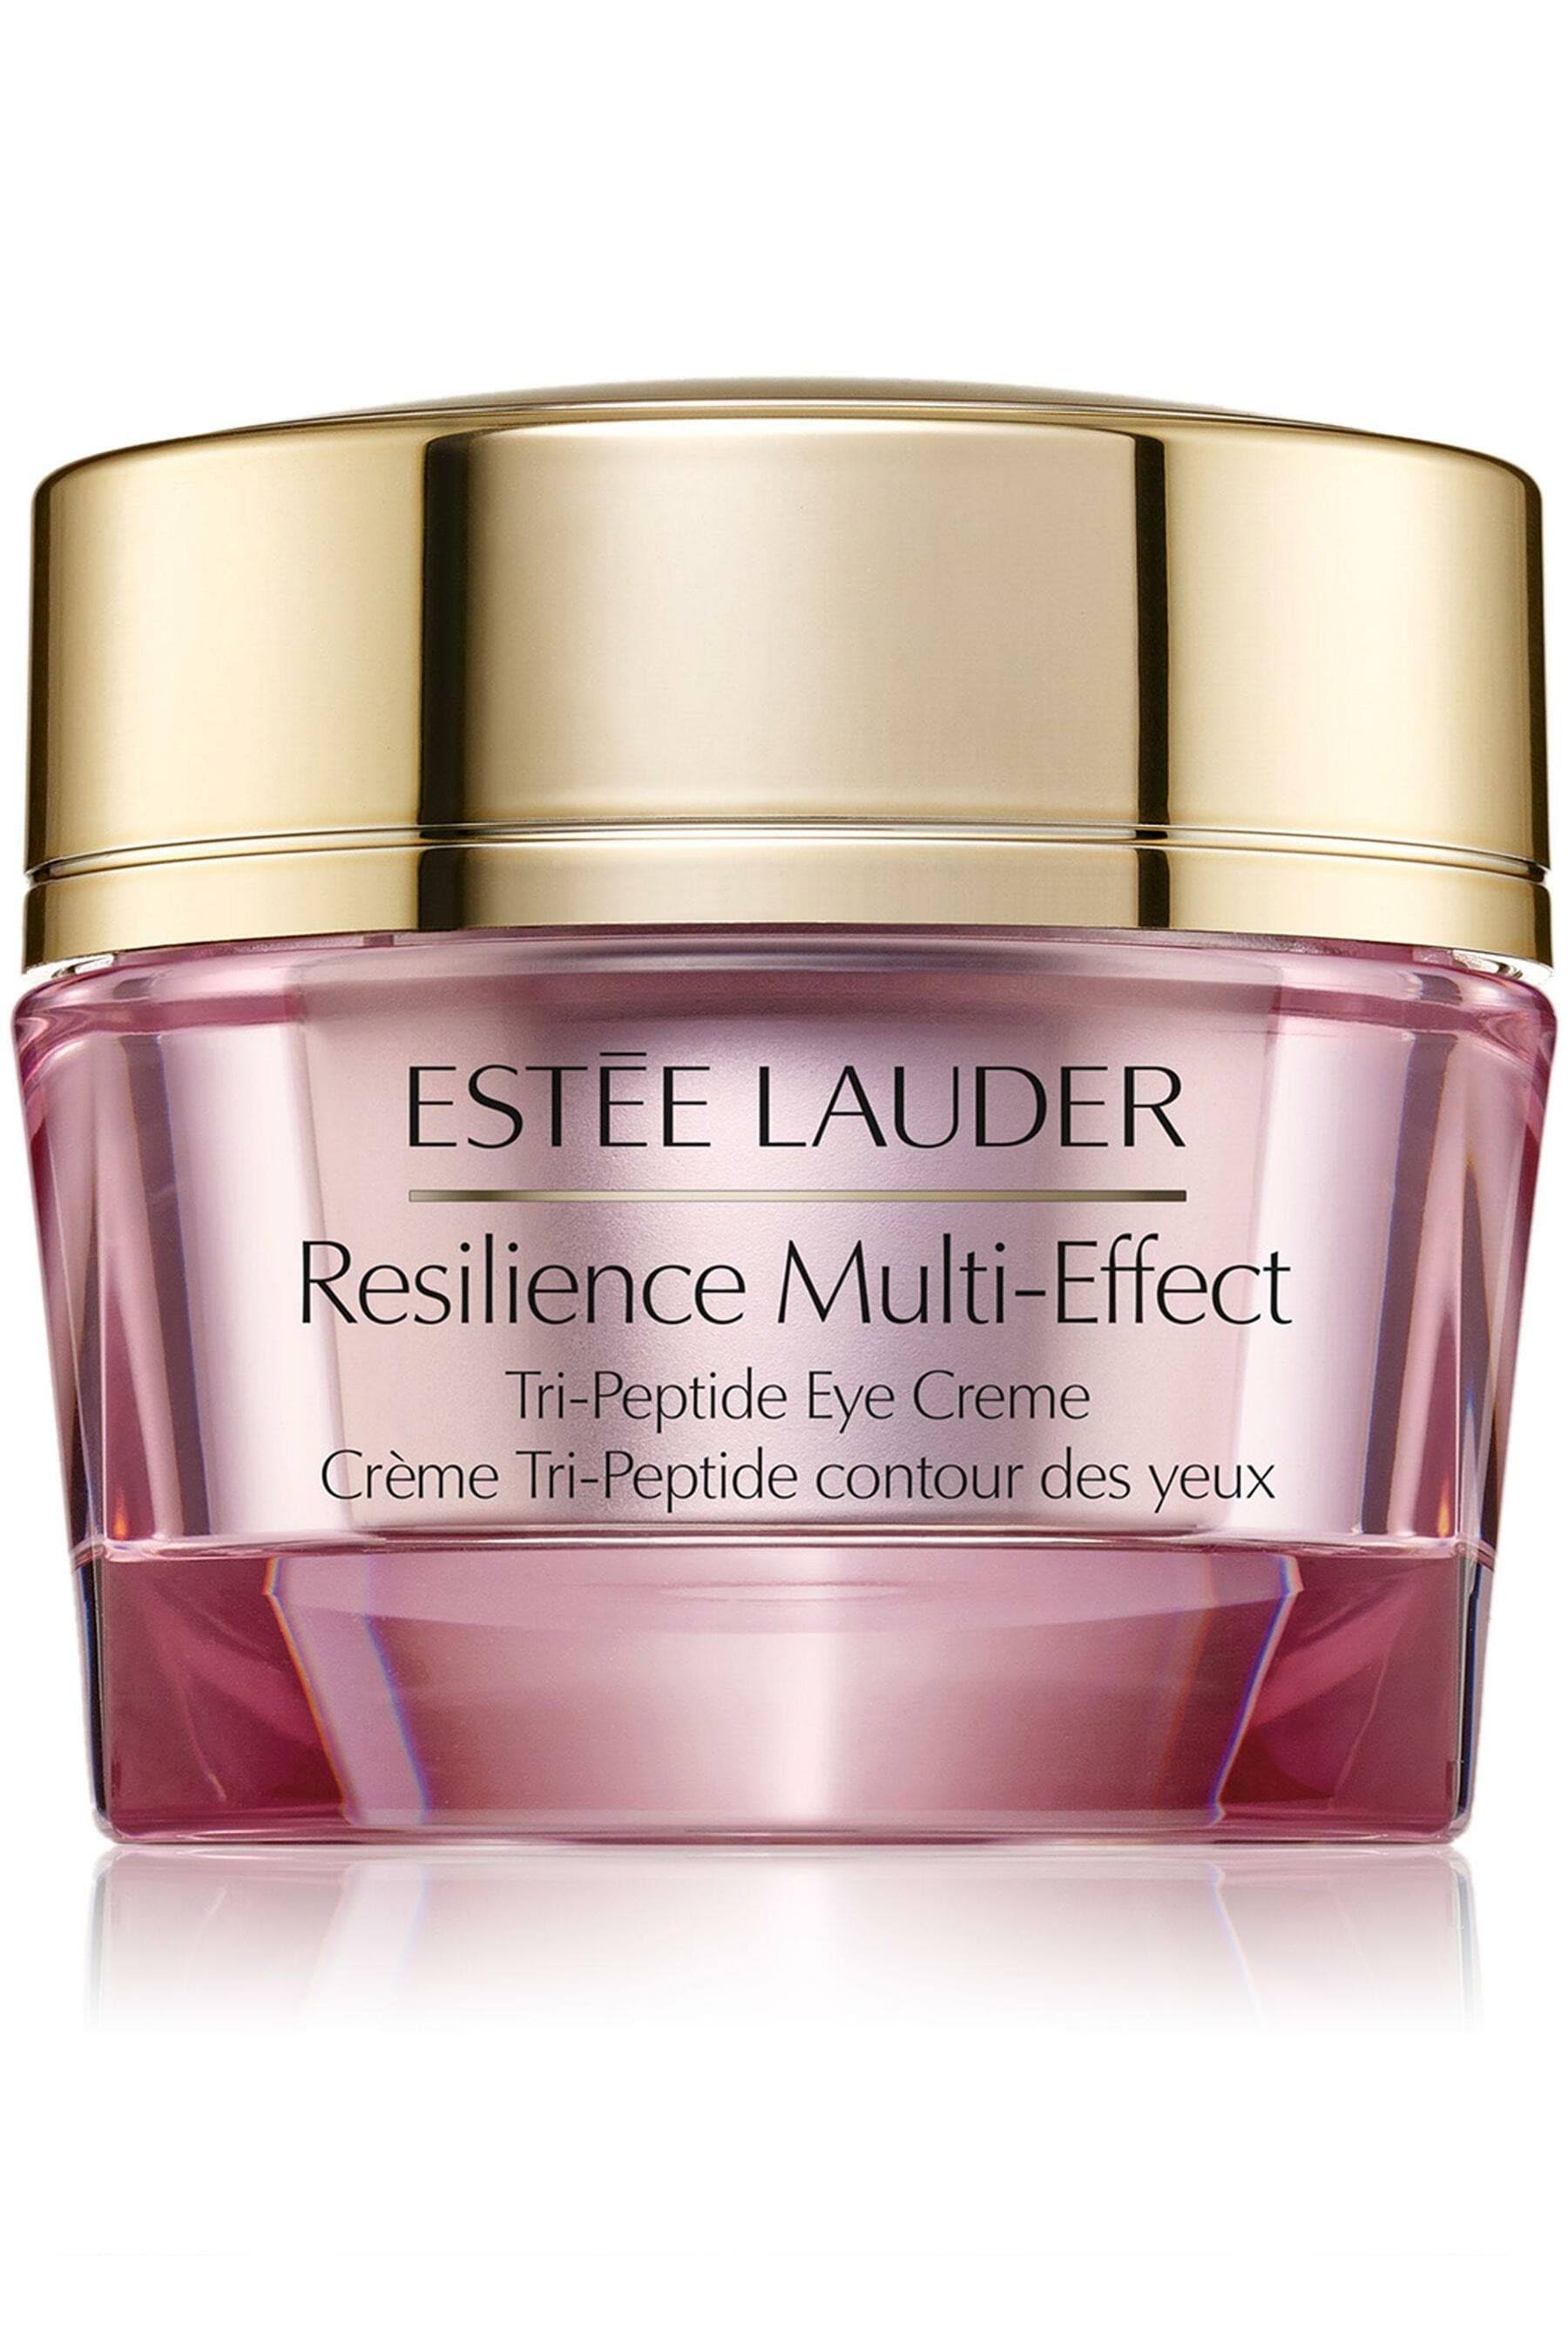 Estee Lauder Resilience Multi-Effect Tri-Peptide Eye Creme - 0.5oz